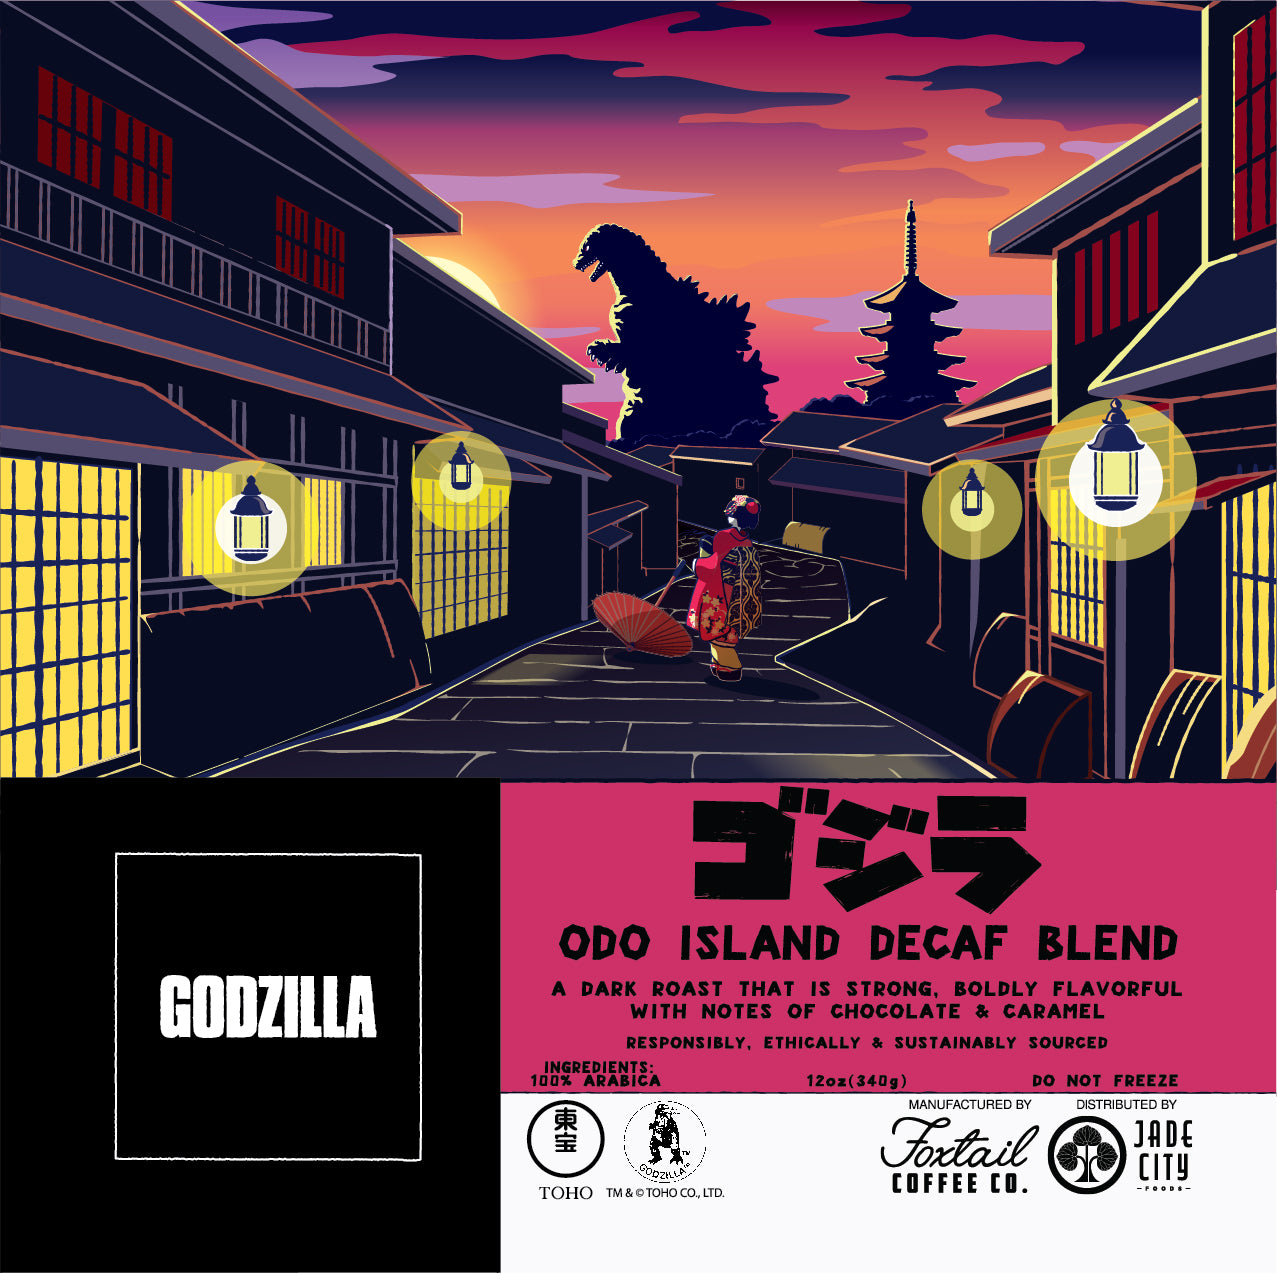 Godzilla's Odo Island Decaf Blend (Dark Roast Coffee)